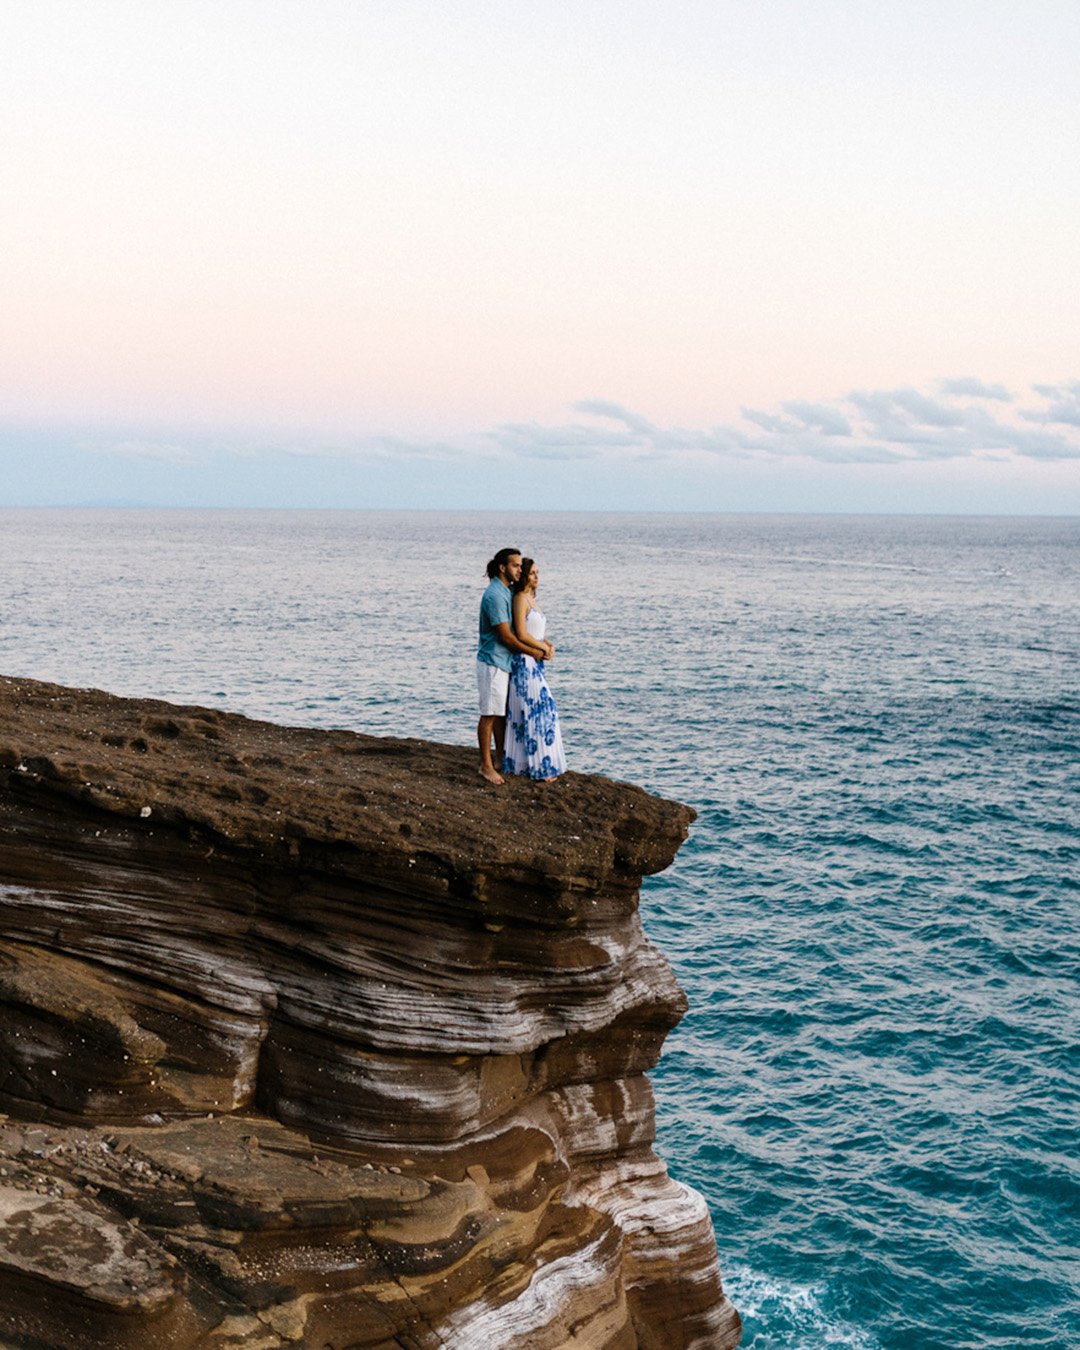 affordable honeymoon packages lovely couple oahu hawaii wanderway.photo